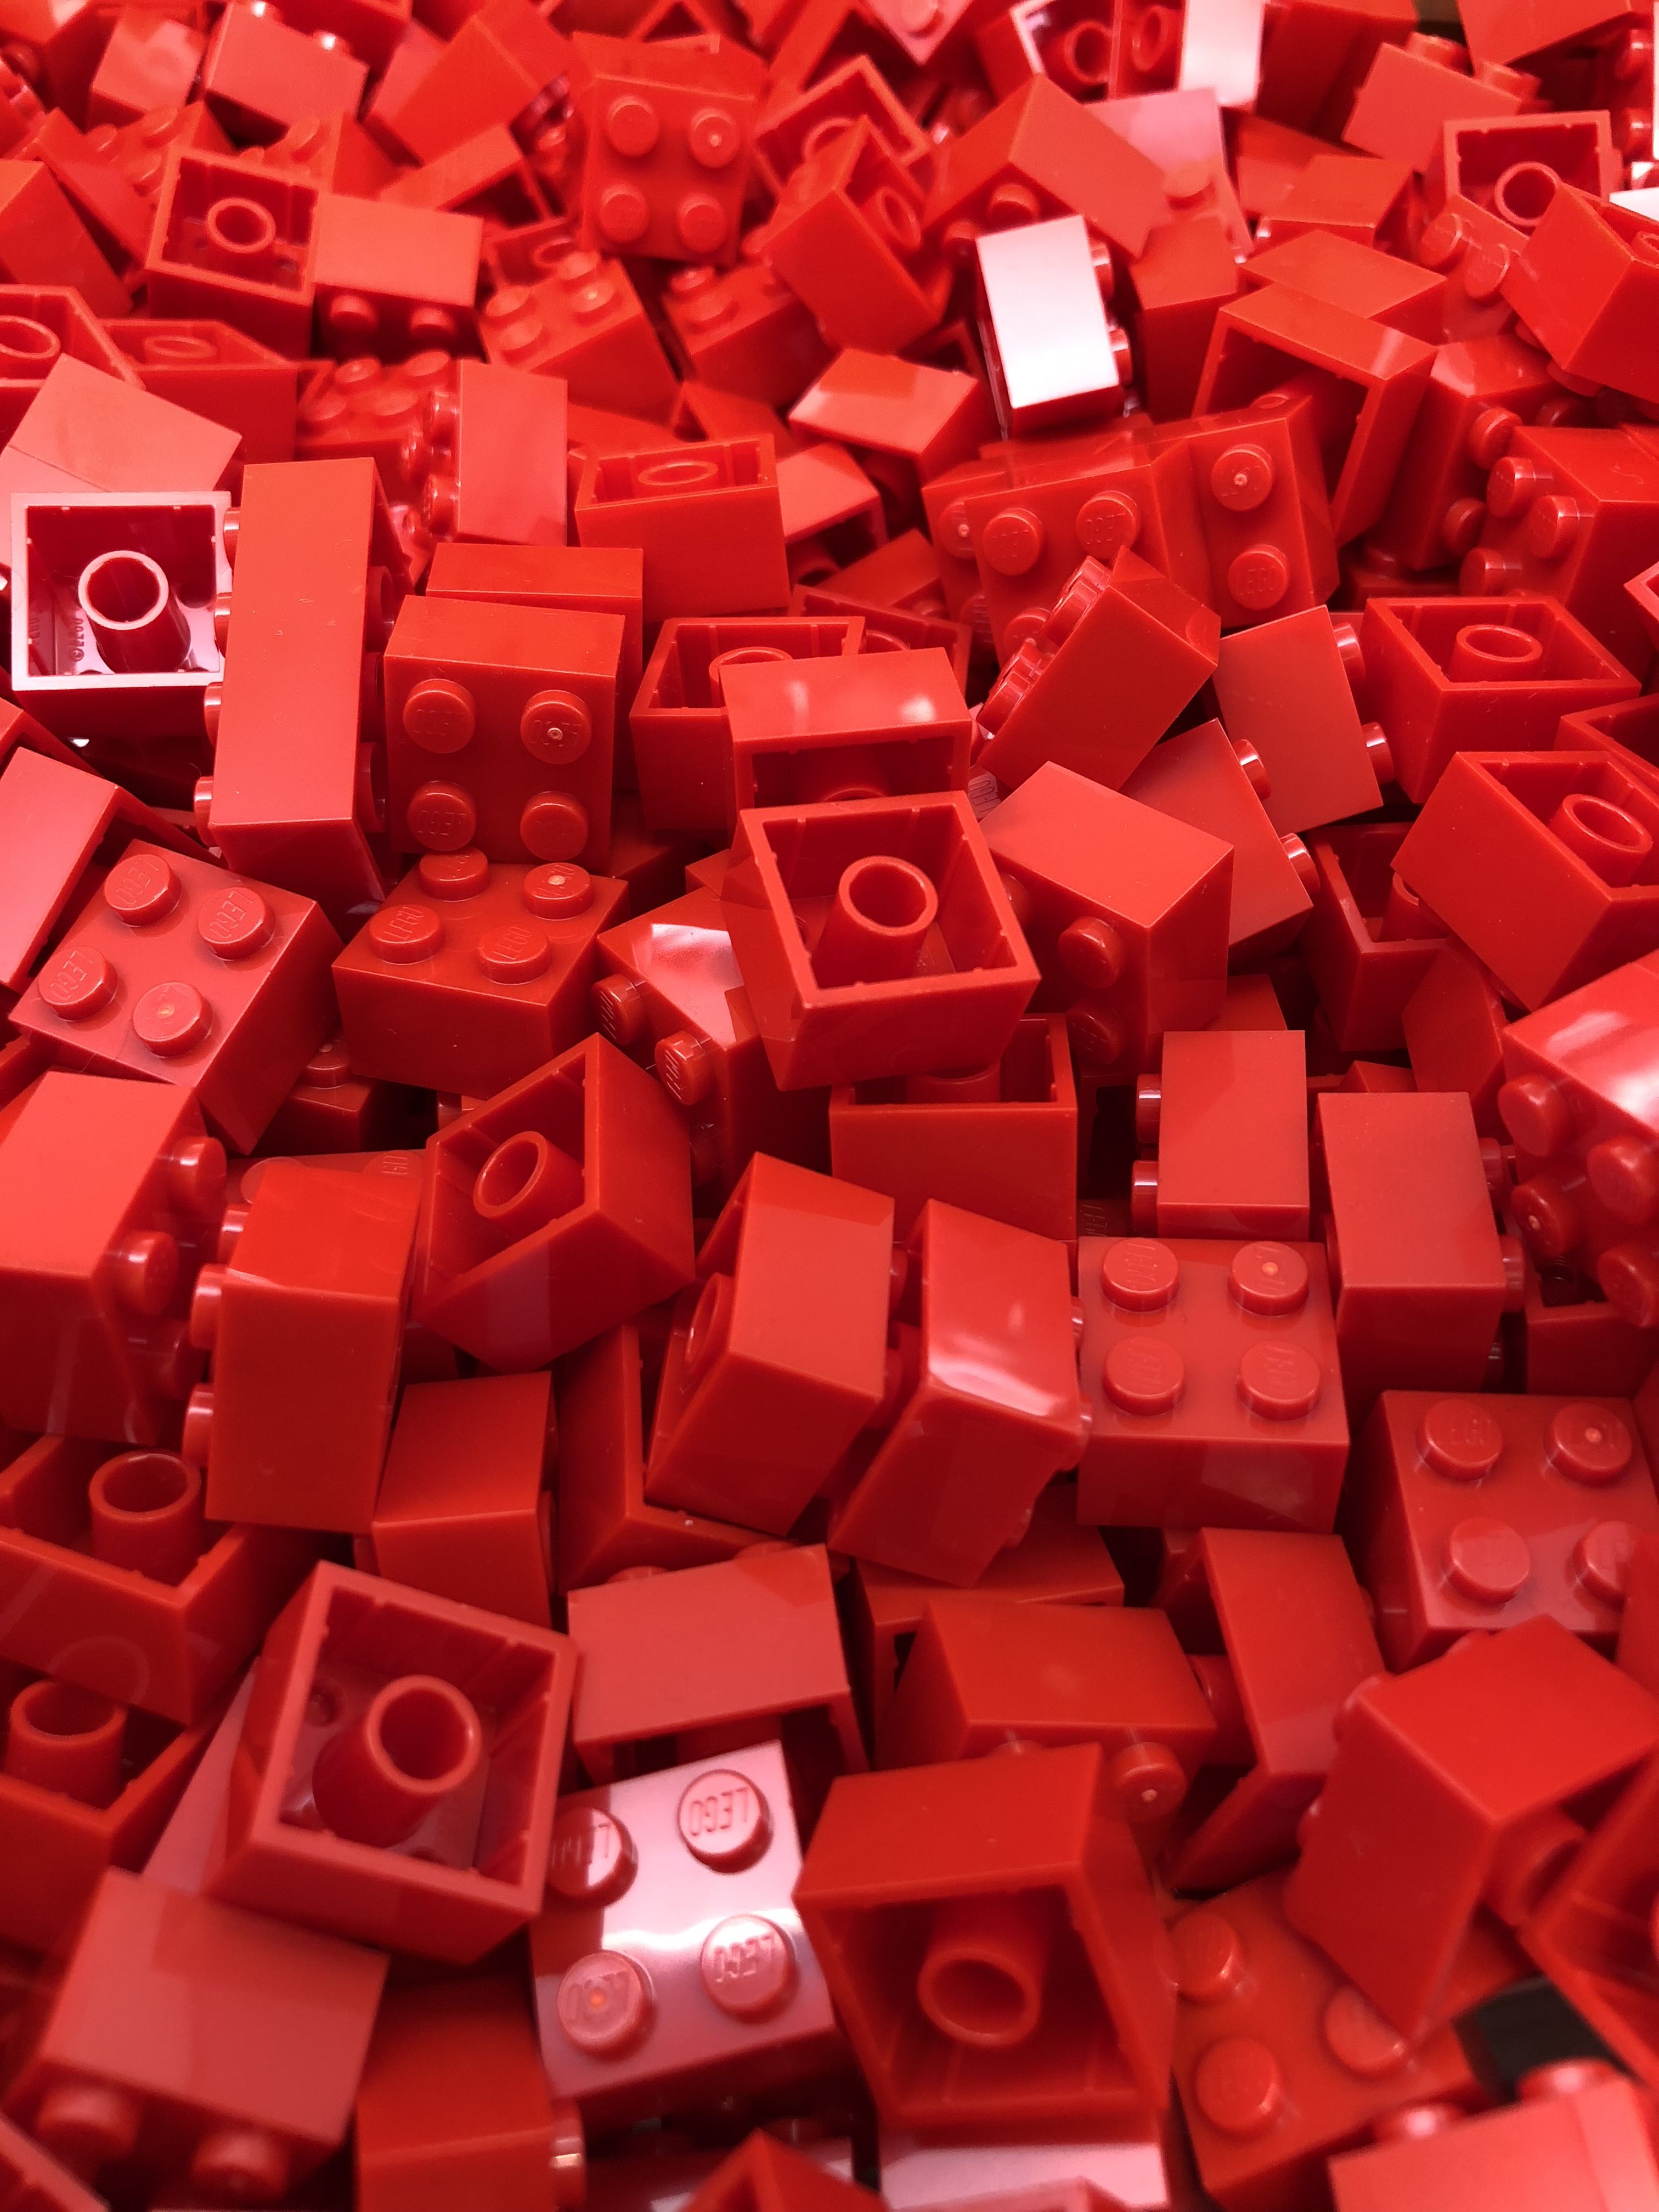 Red Lego Bricks Wallpaper Candy